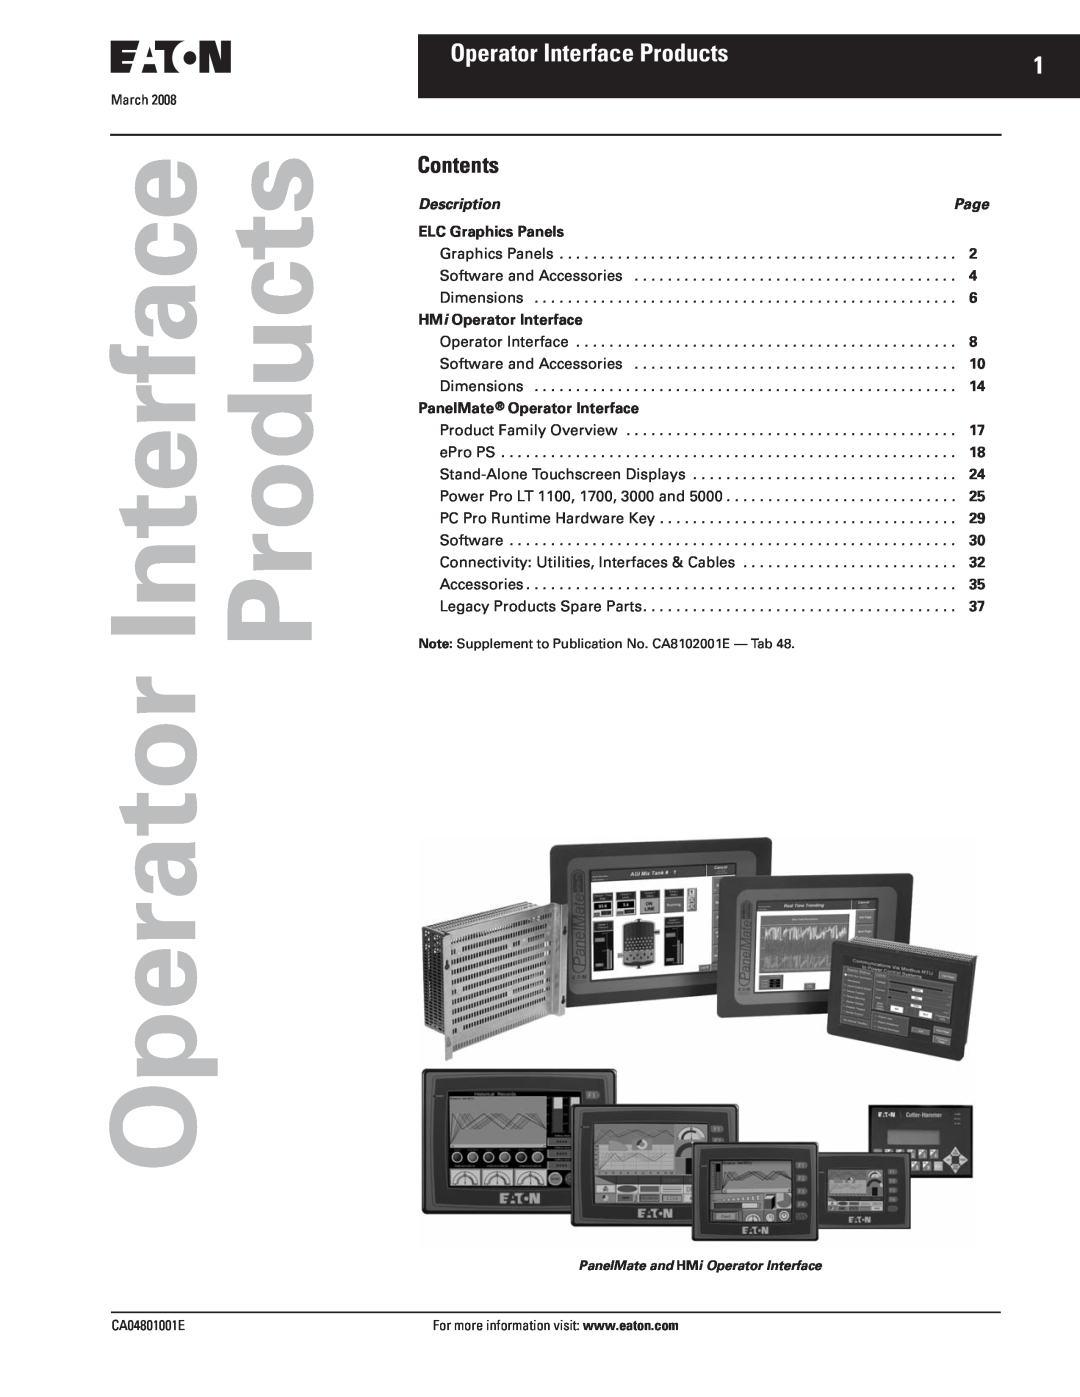 Eaton Electrical CA04801001E manual Operator Interface Products, Contents, Description, ELC Graphics Panels 